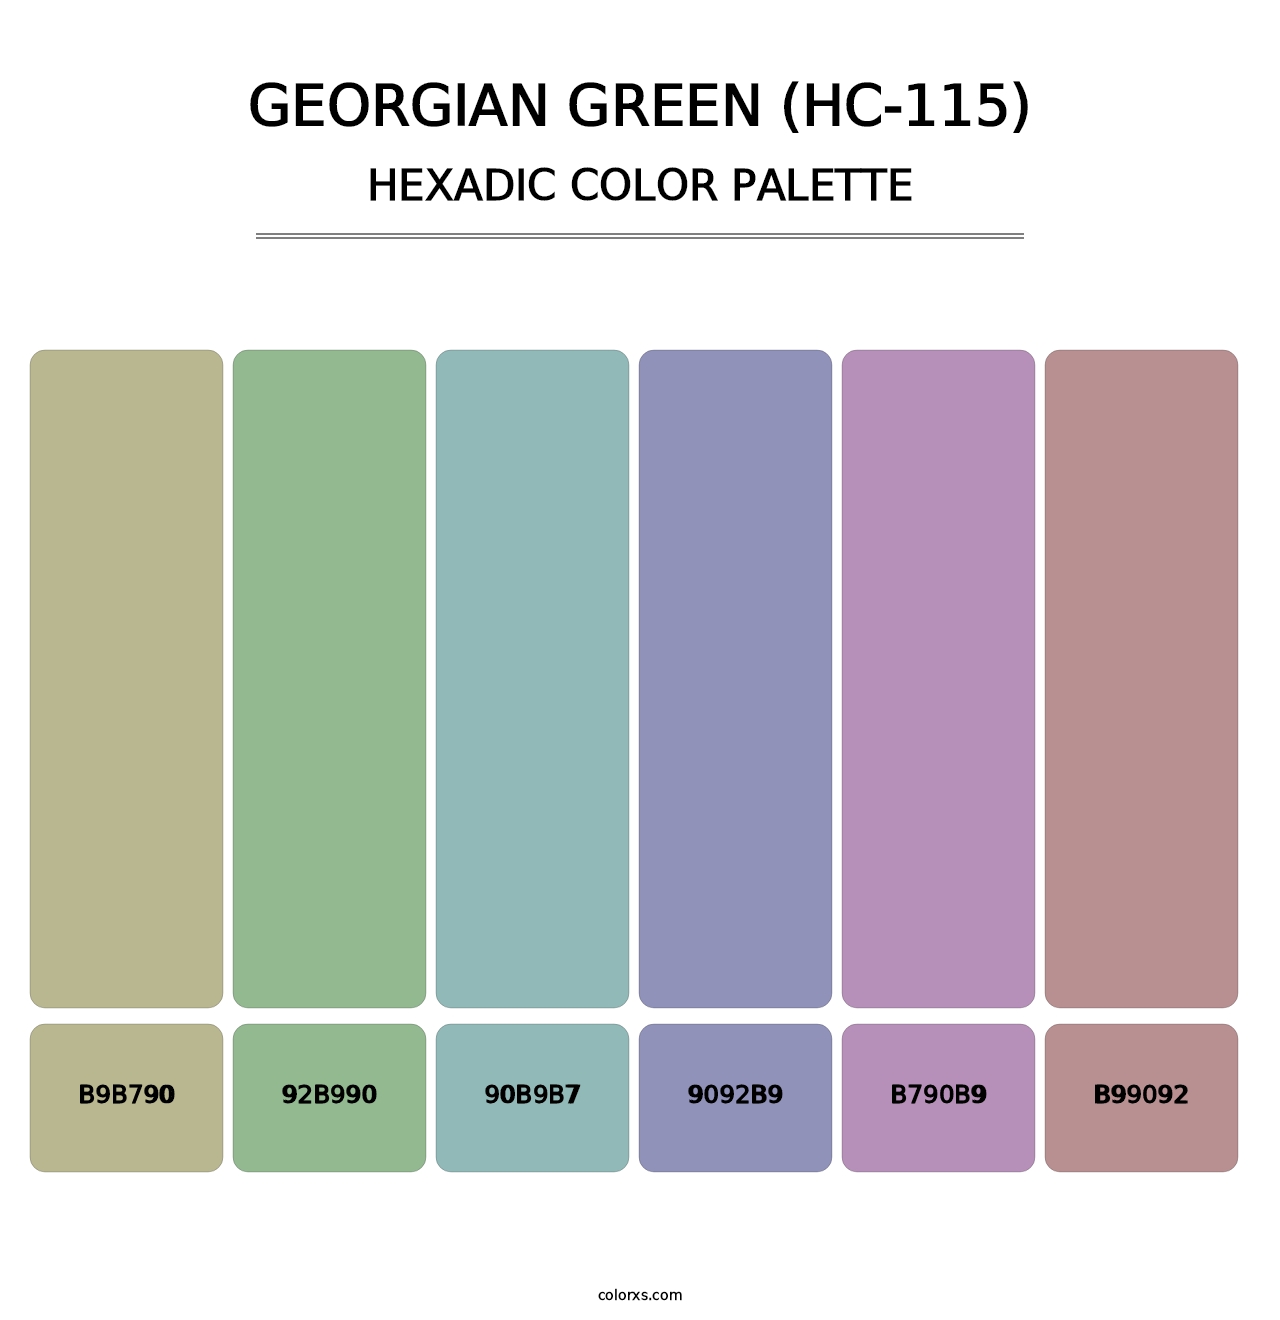 Georgian Green (HC-115) - Hexadic Color Palette